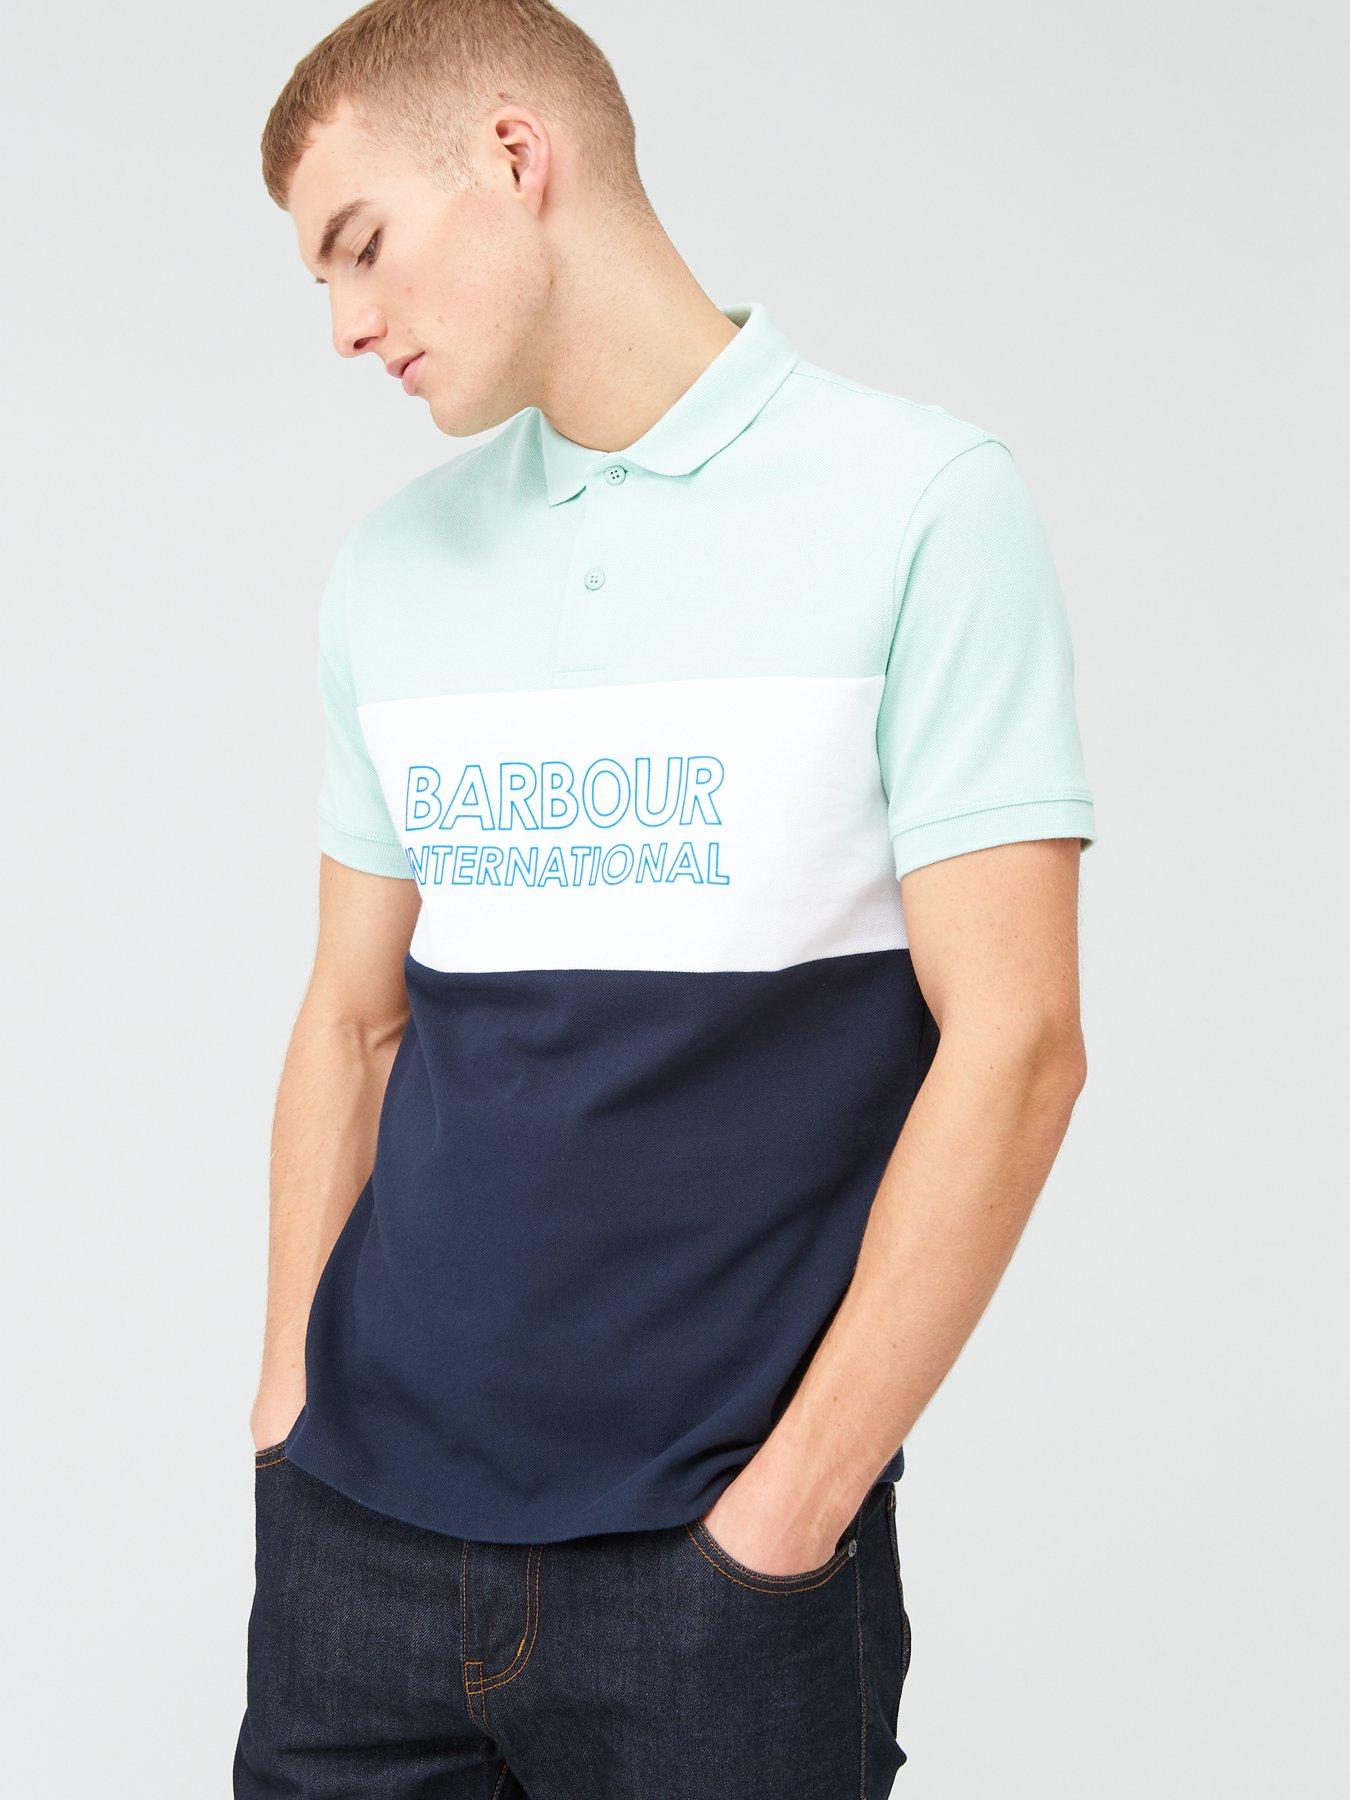 women's barbour international t shirt sale